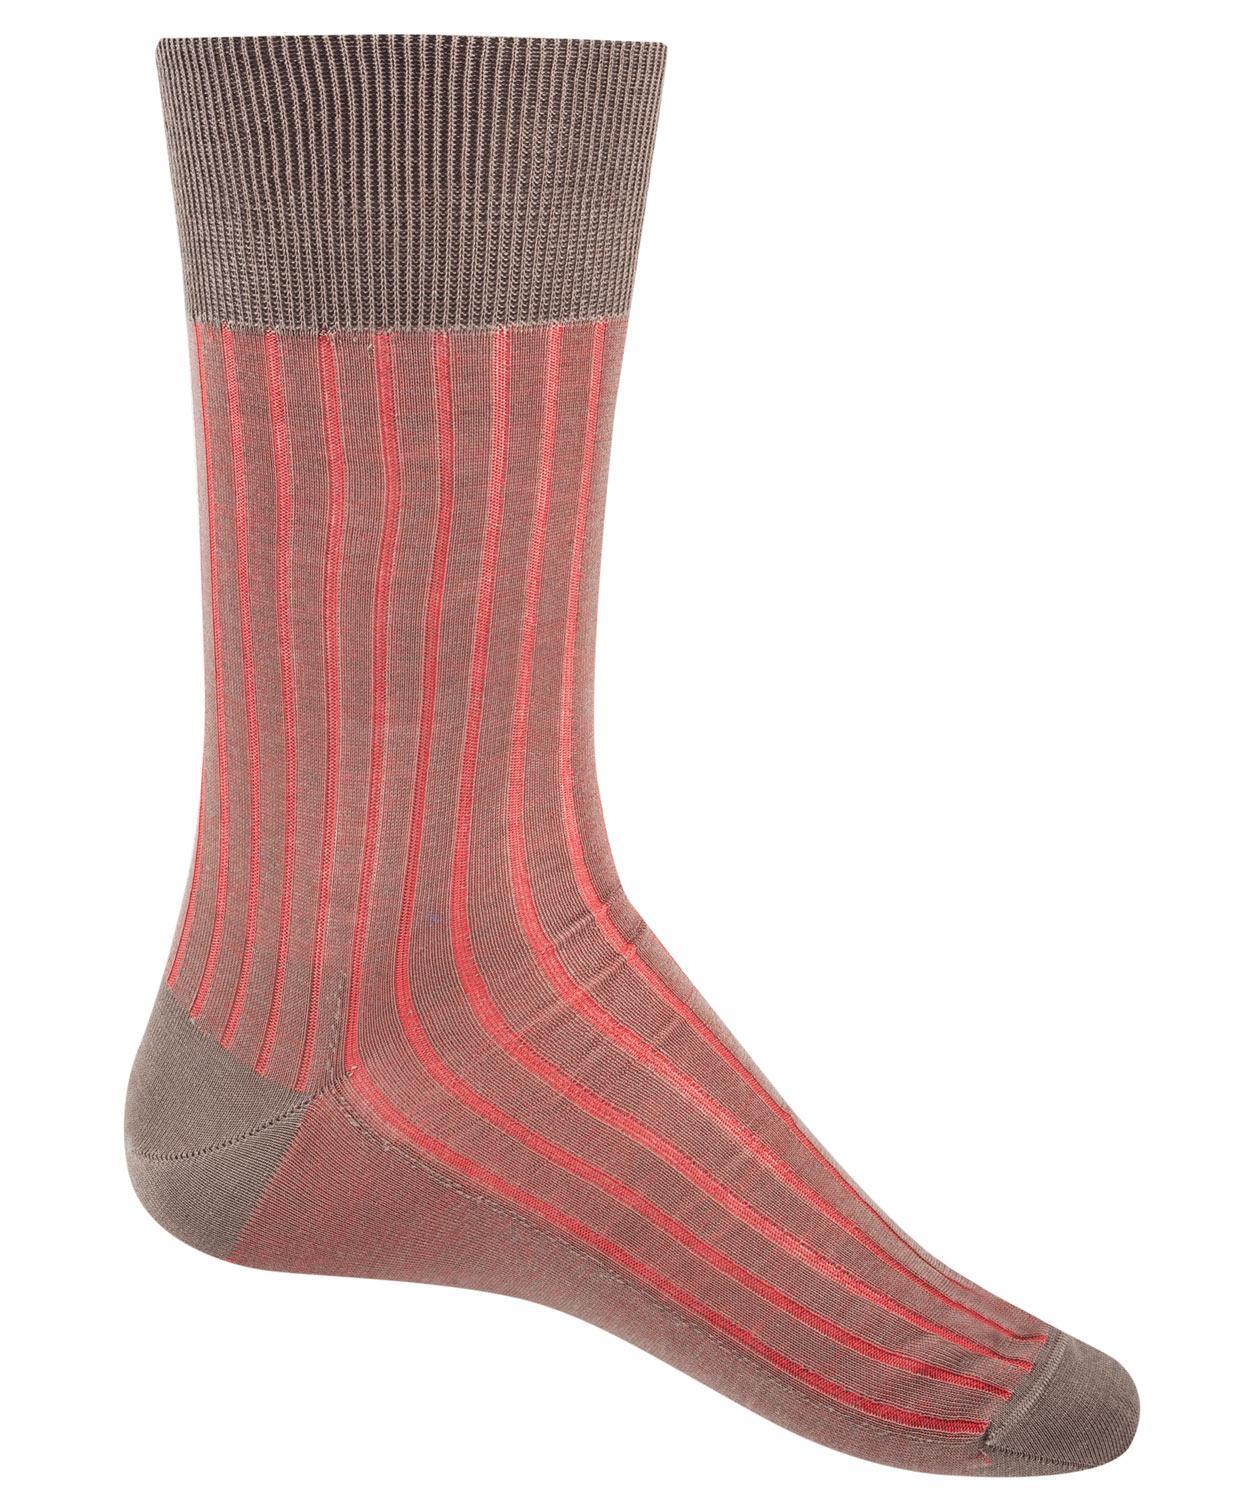 Lyst - Falke Shadow Ribbed Ankle Socks in Brown for Men